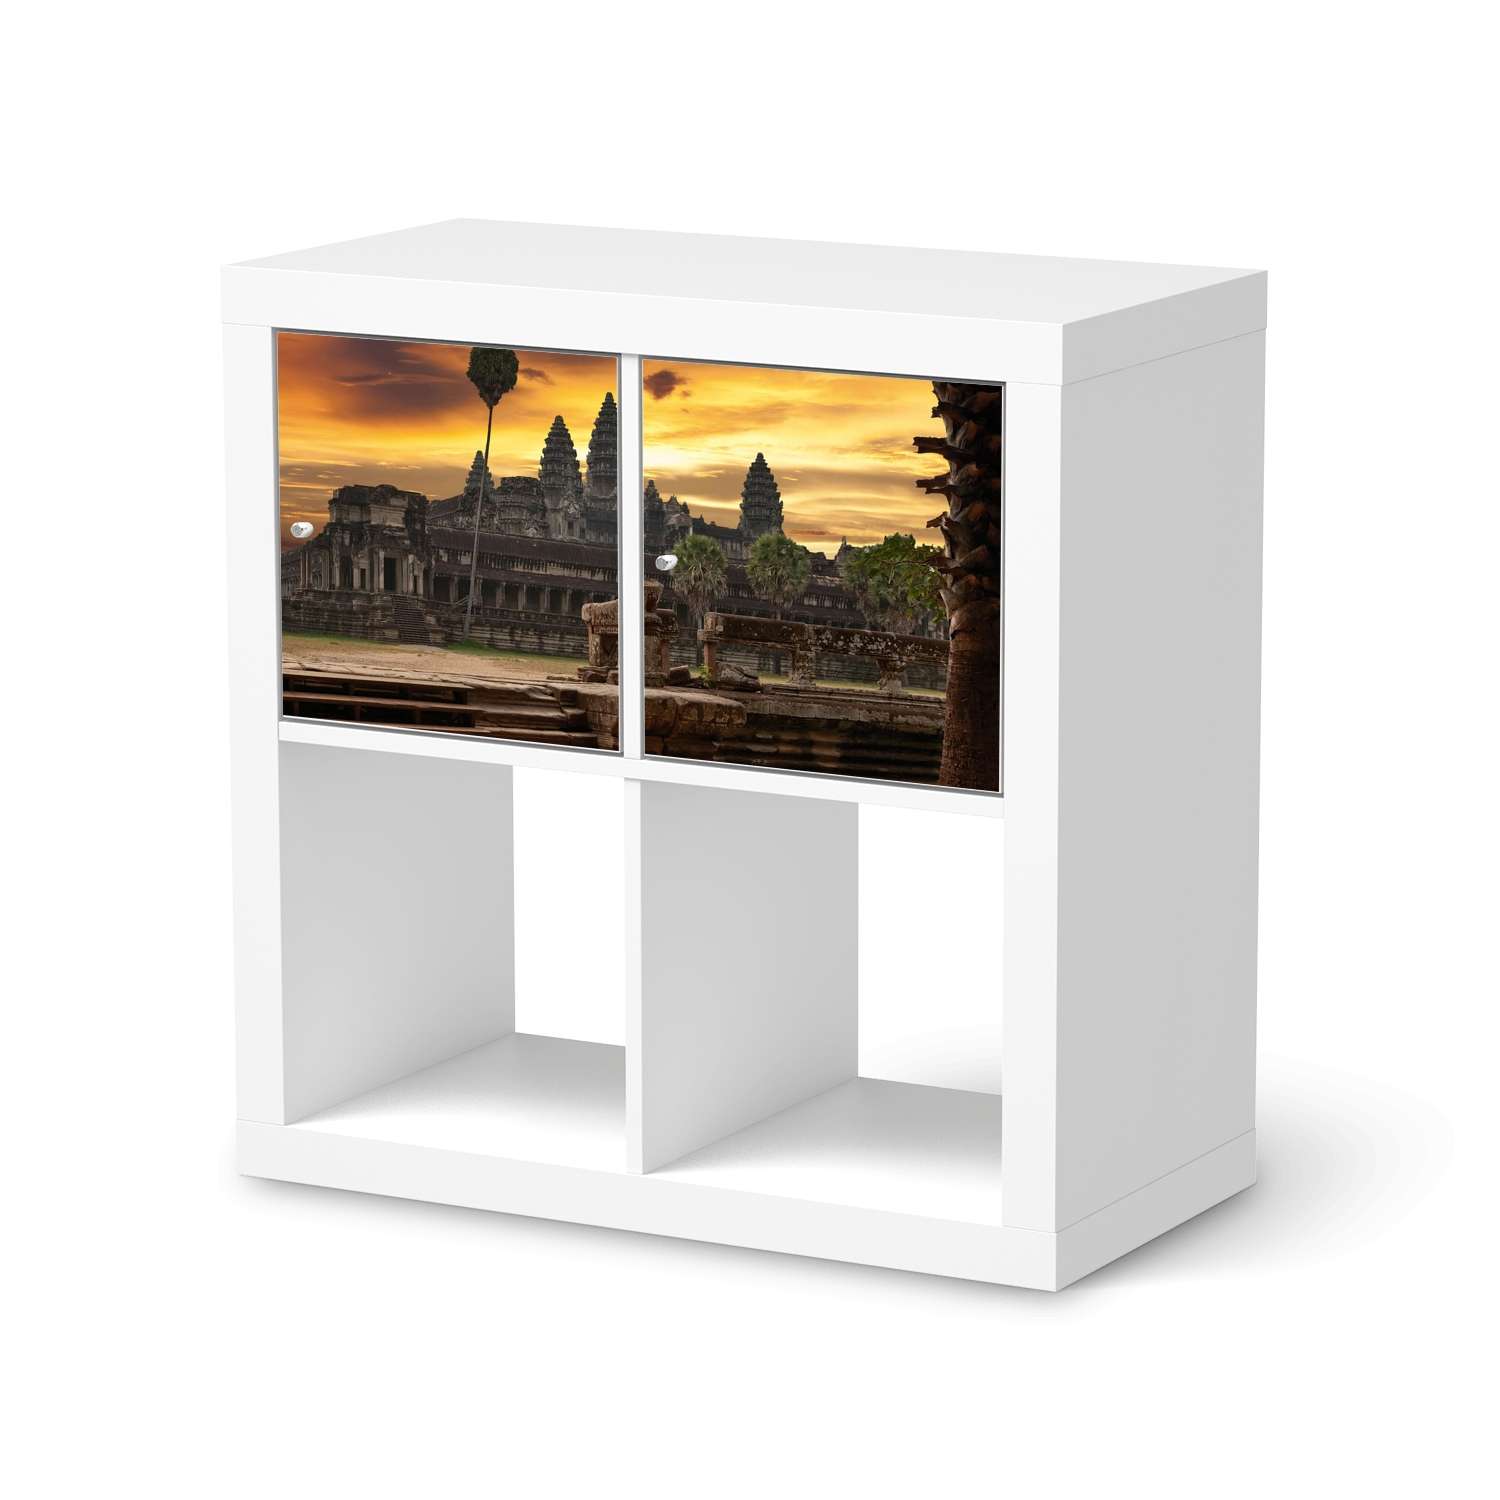 M?bel Klebefolie IKEA Expedit Regal 2 T?ren (quer) - Design: Angkor Wat von creatisto